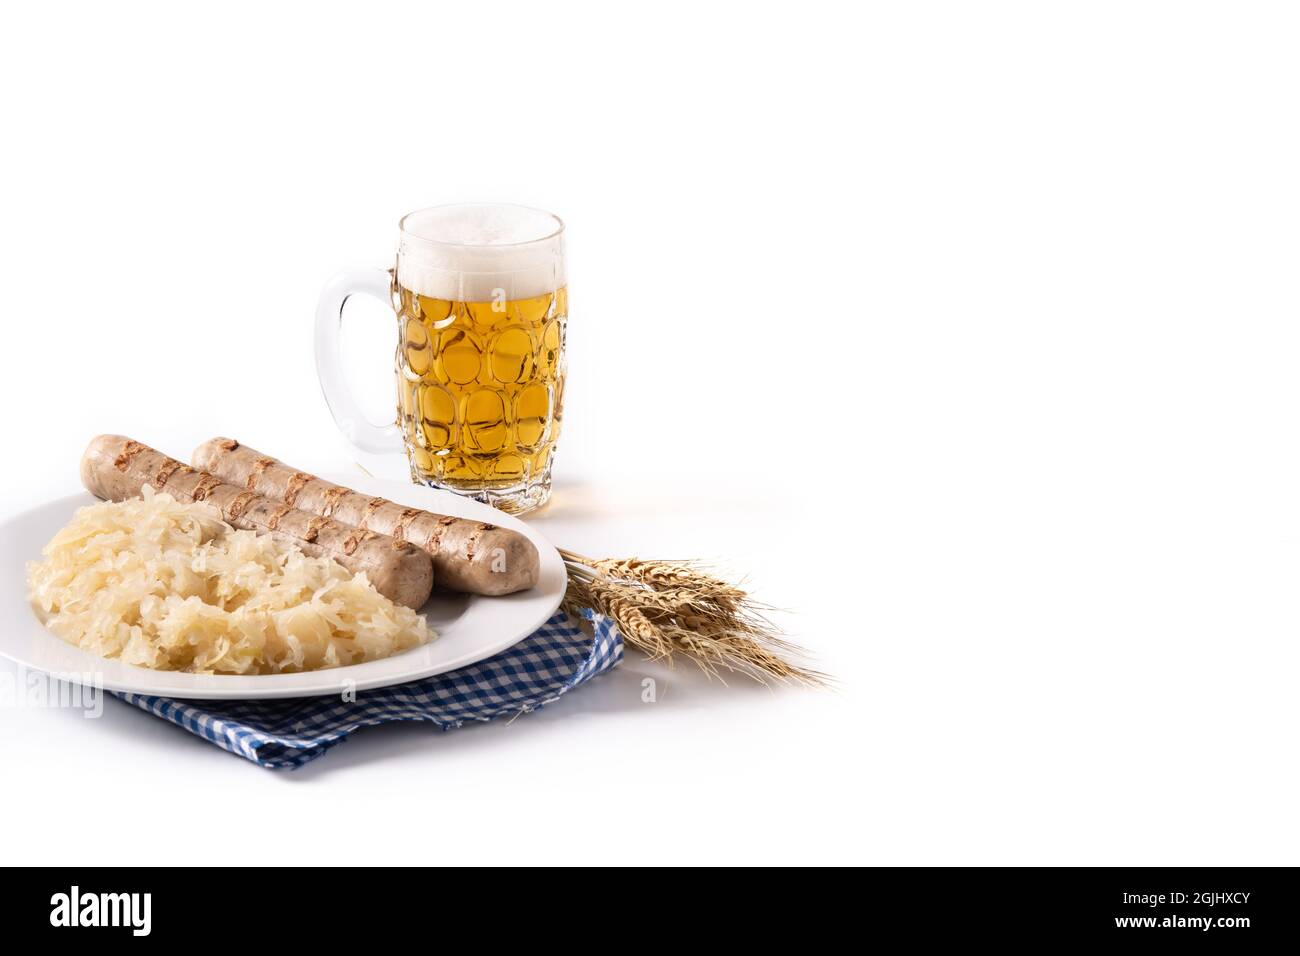 Bratwurst sausage ,sauerkraut, pretzels and beer isolated on white background Stock Photo